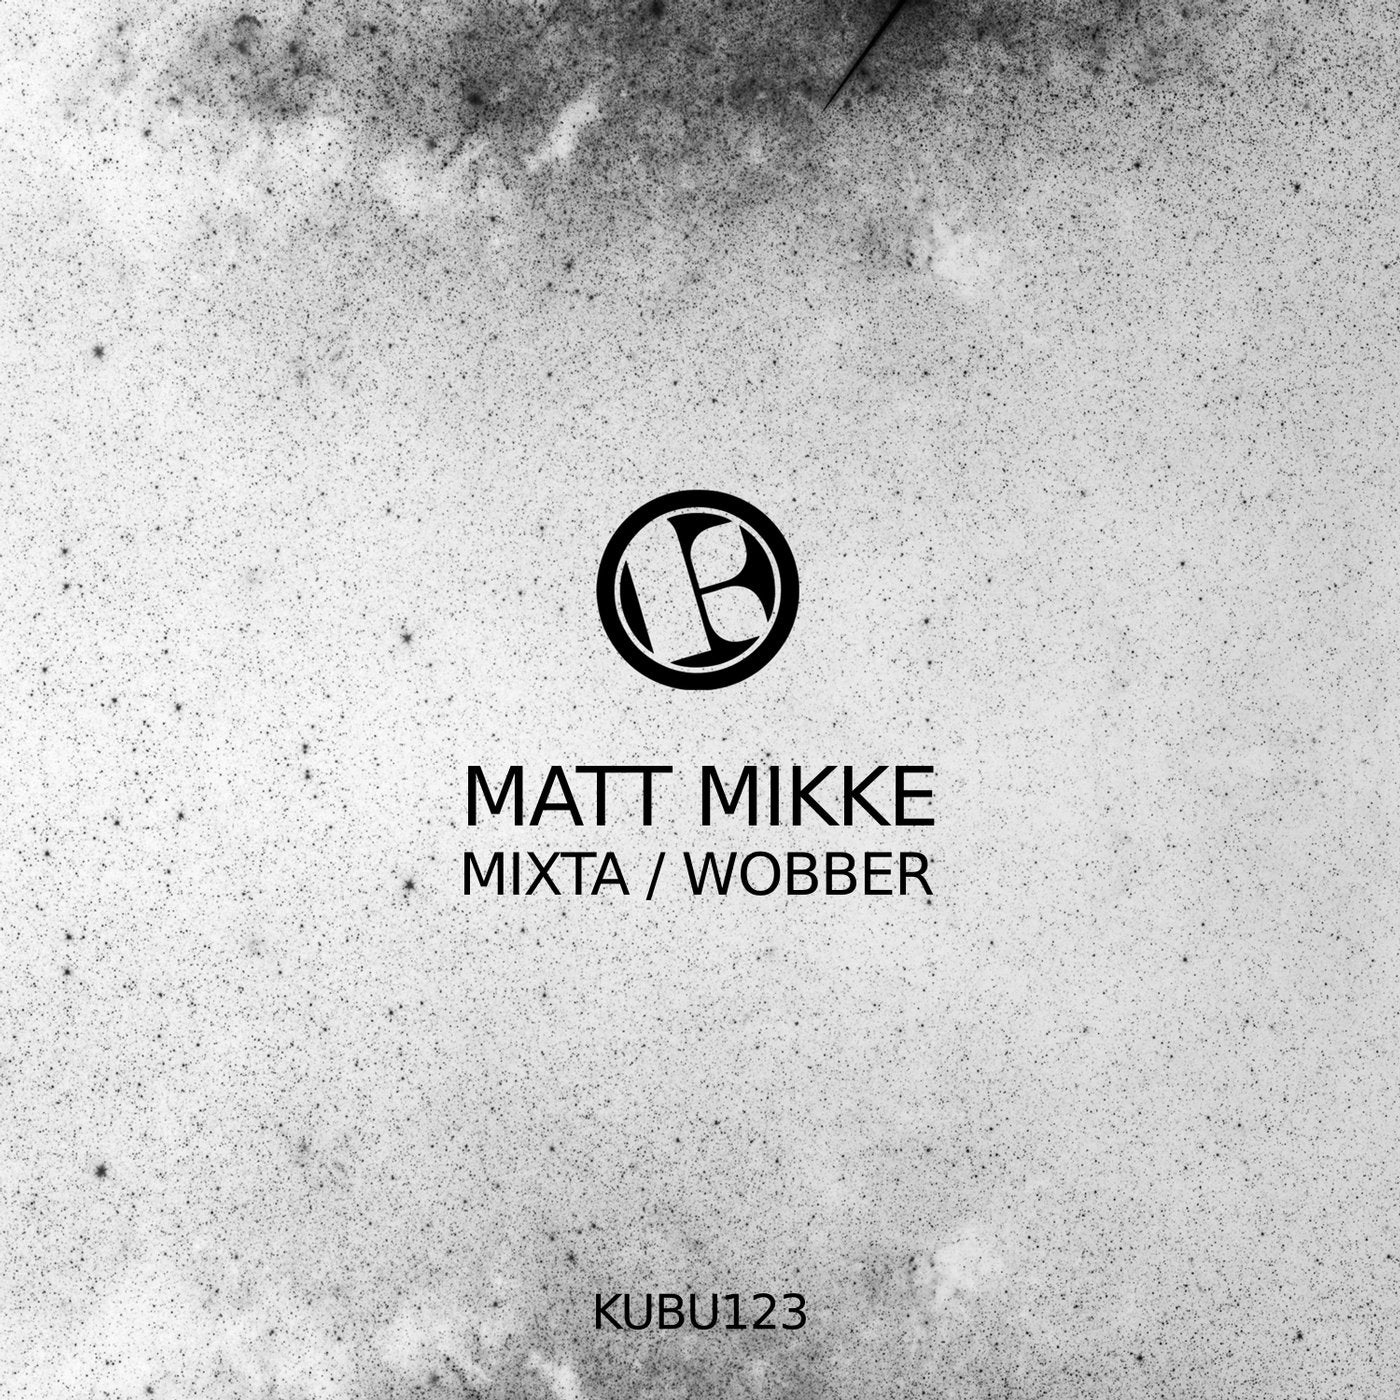 Mixta / Wobber